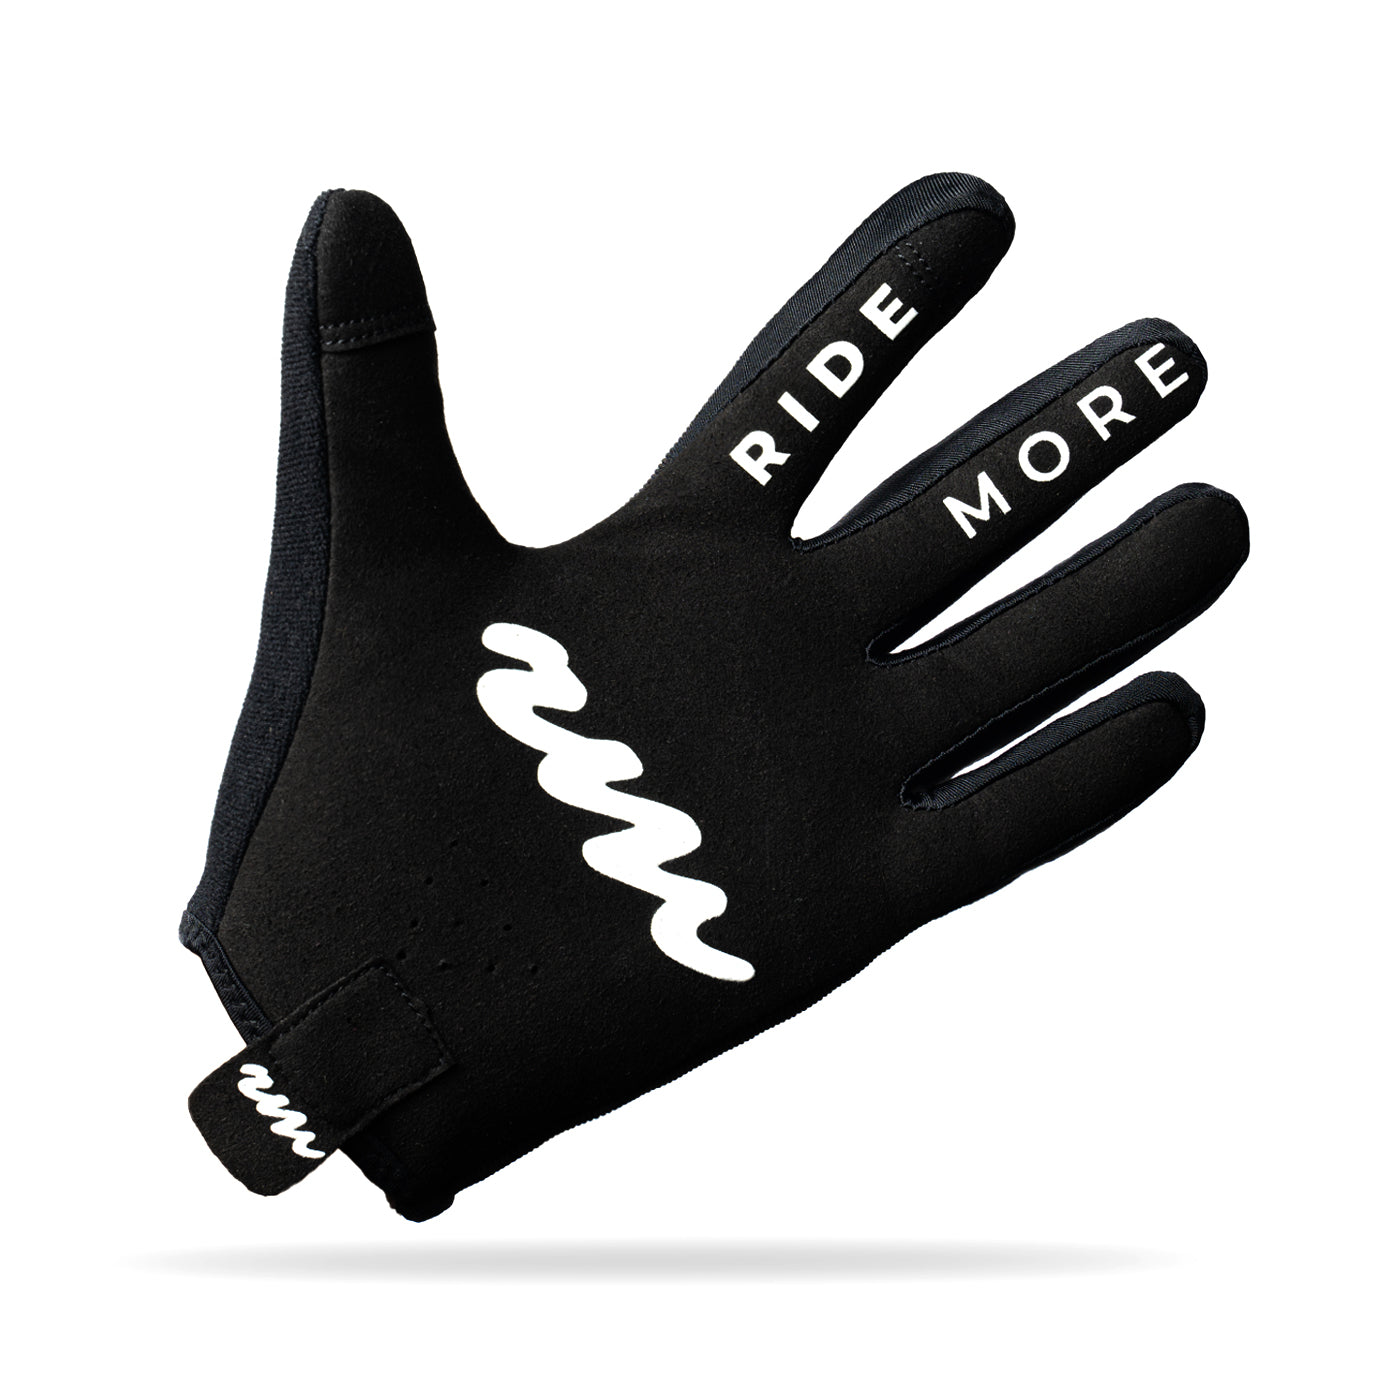 Roller Handschuhe| gut Griff, slip-on More Protection | Ride